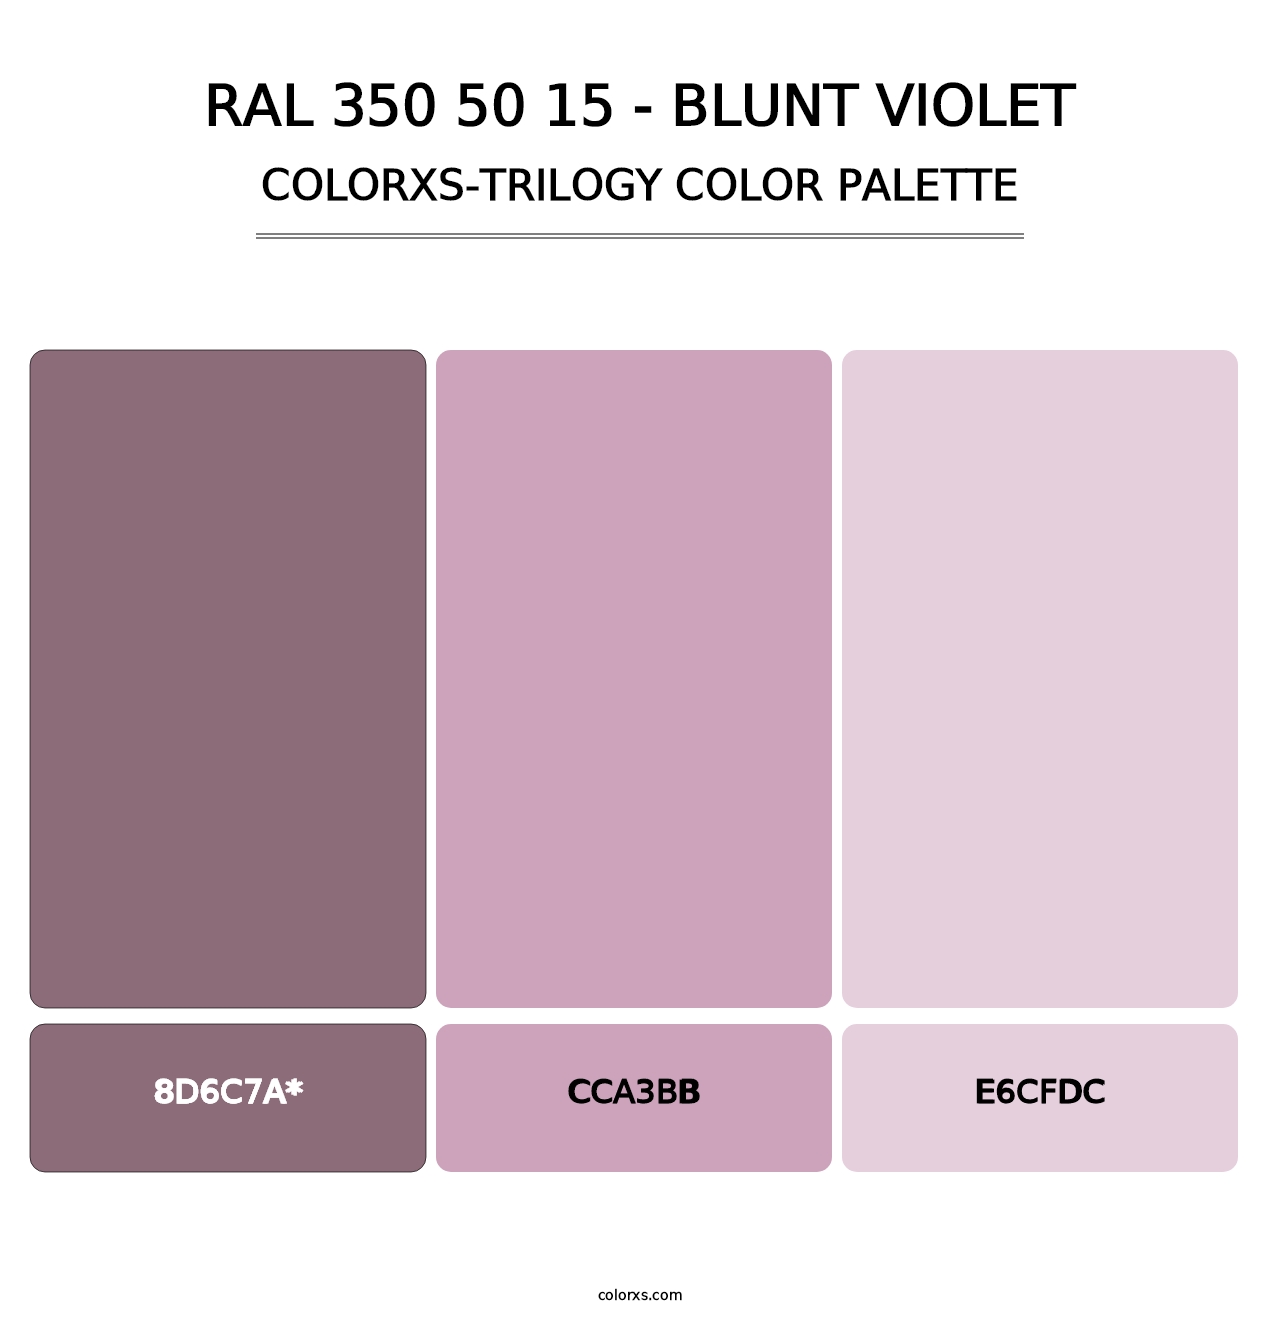 RAL 350 50 15 - Blunt Violet - Colorxs Trilogy Palette